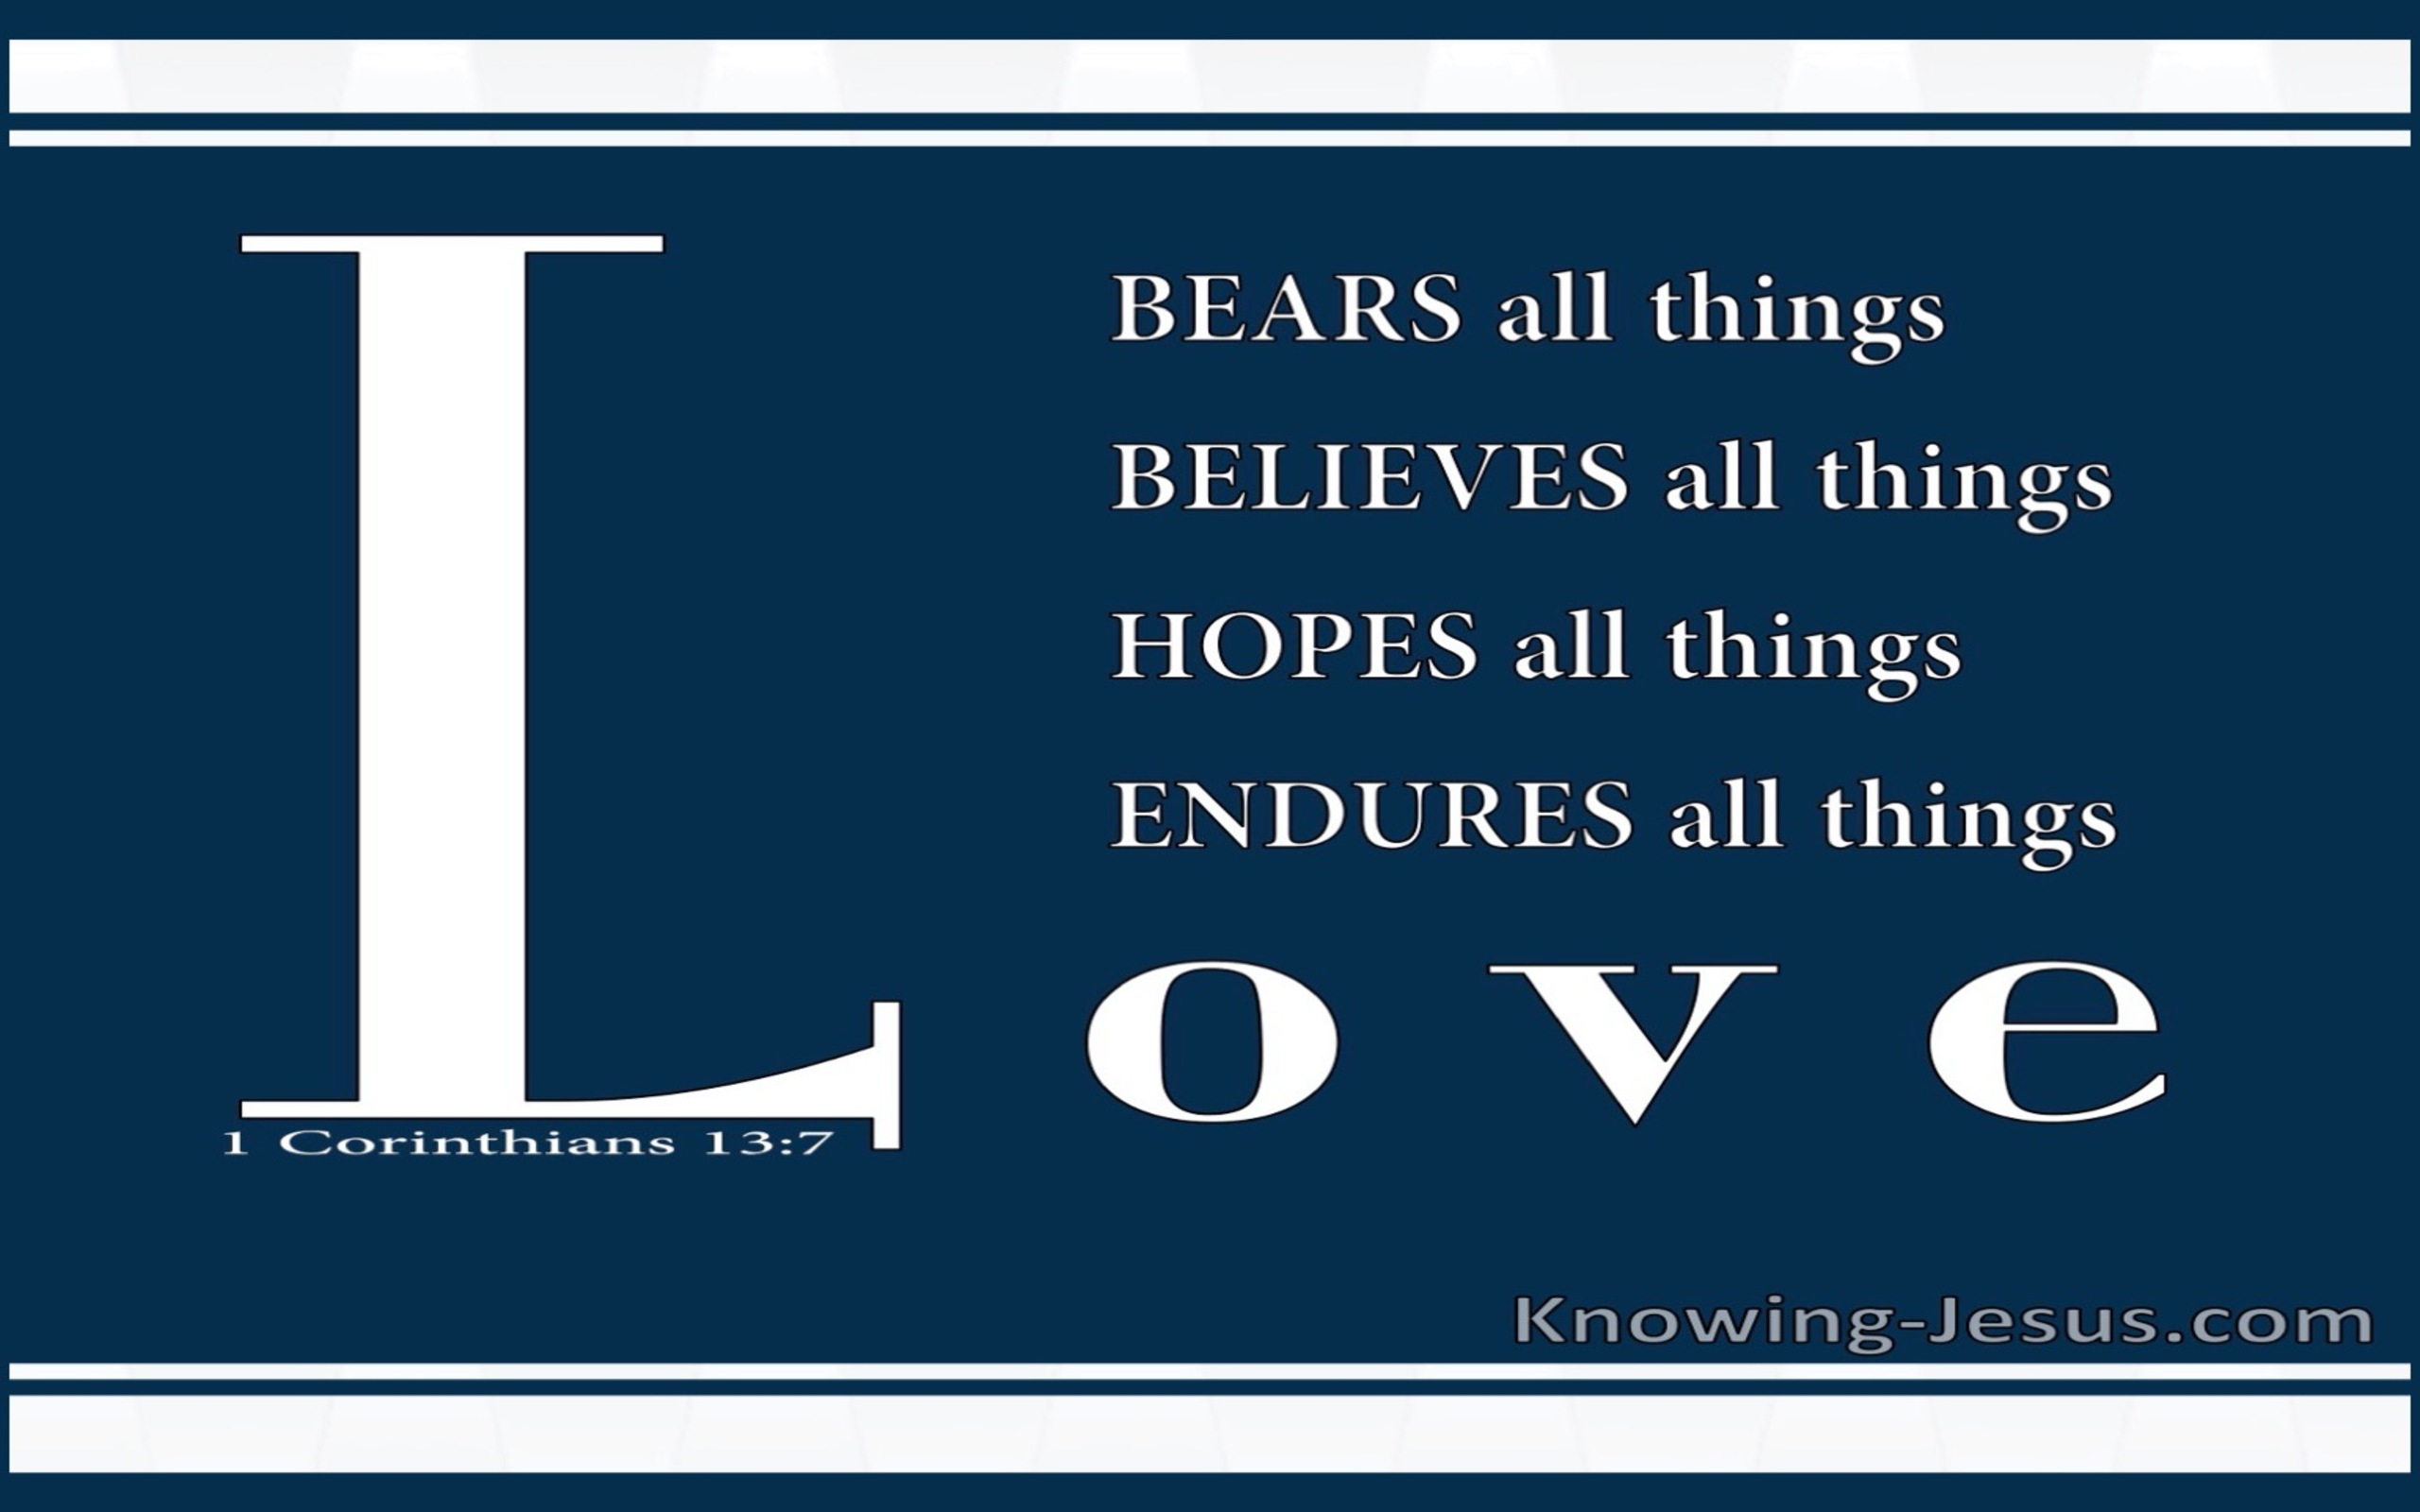 1 Corinthians 13:7 Endures Bears All Things (navy)